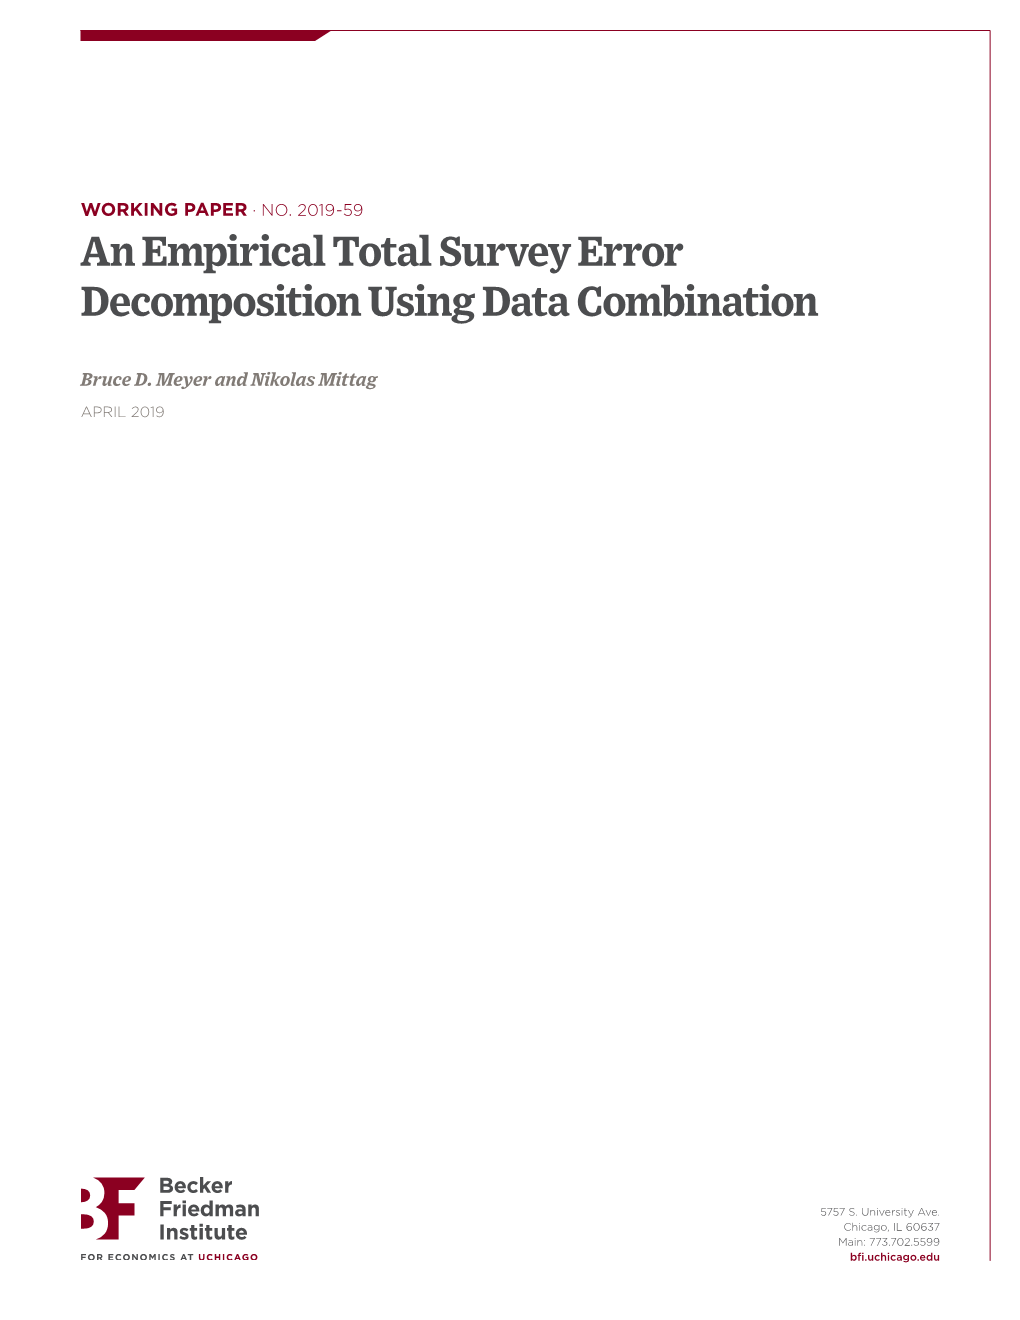 An Empirical Total Survey Error Decomposition Using Data Combination